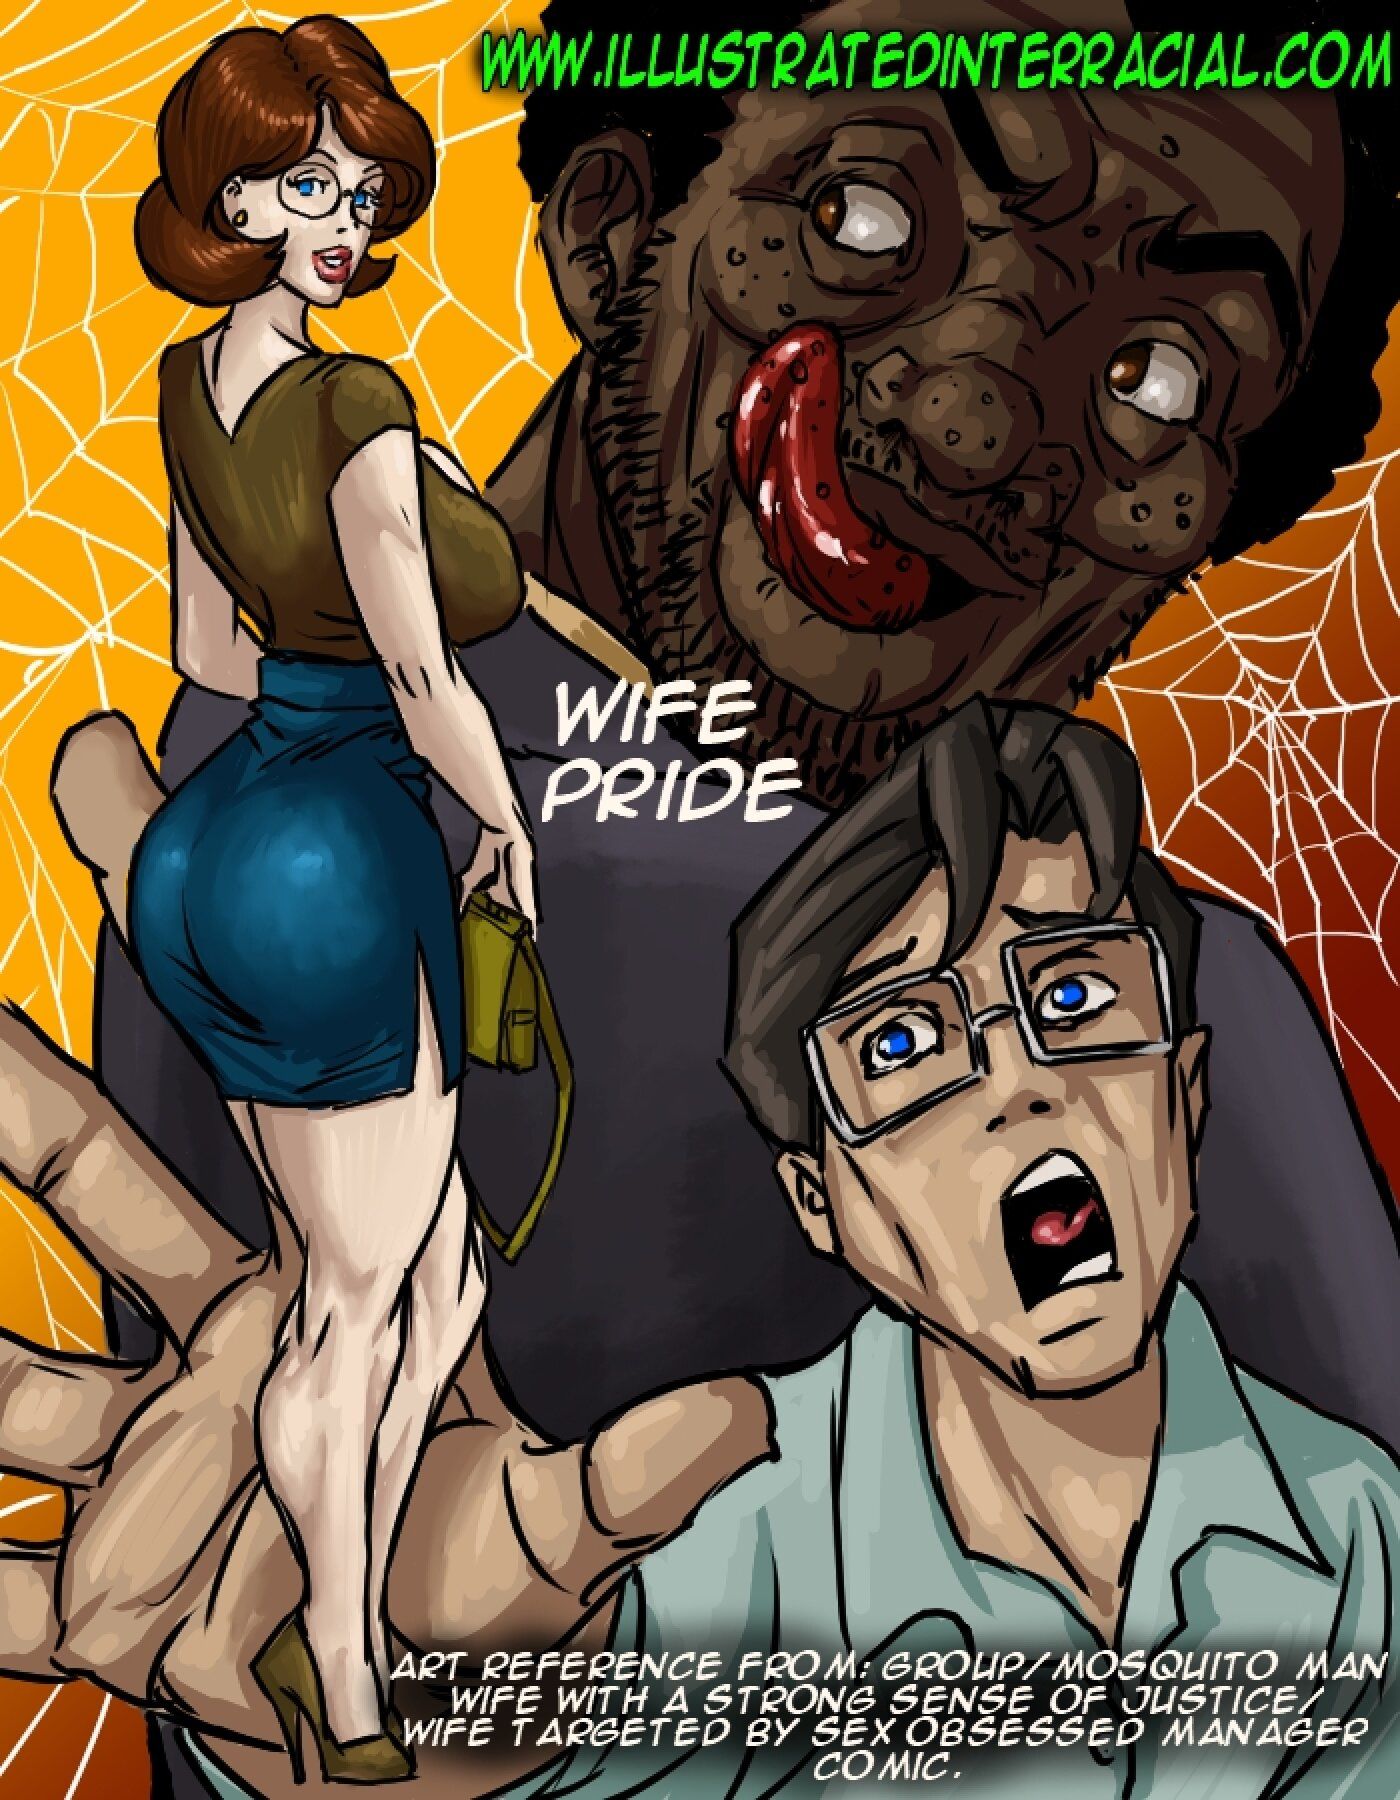 Illustratedinterracial - Wife Pride page 1